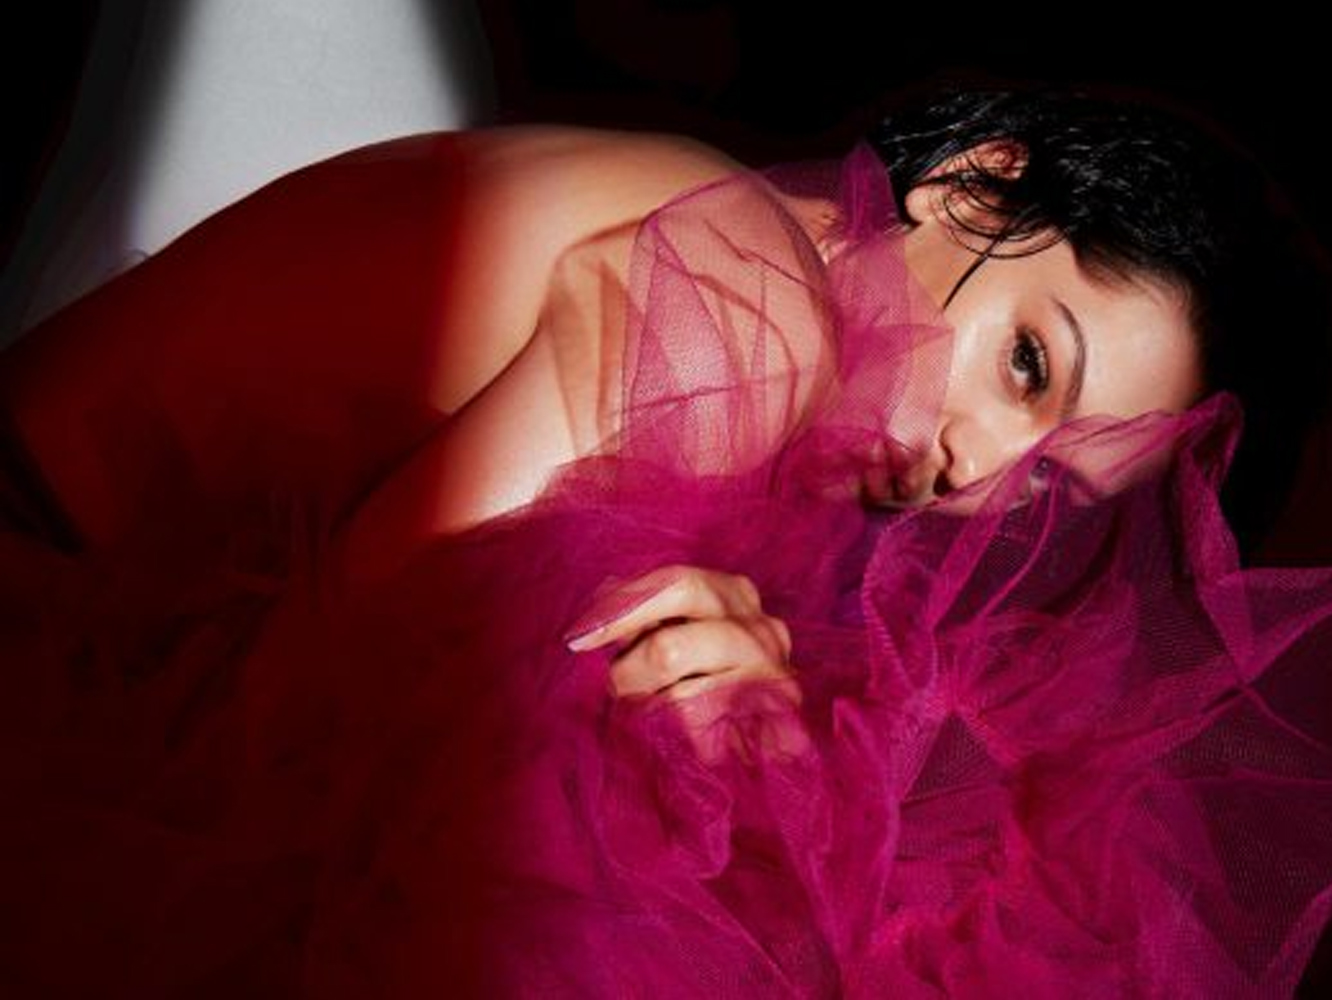  La difunta artista Jessica J lanza otro single póstumo, ‘Not My Ex’